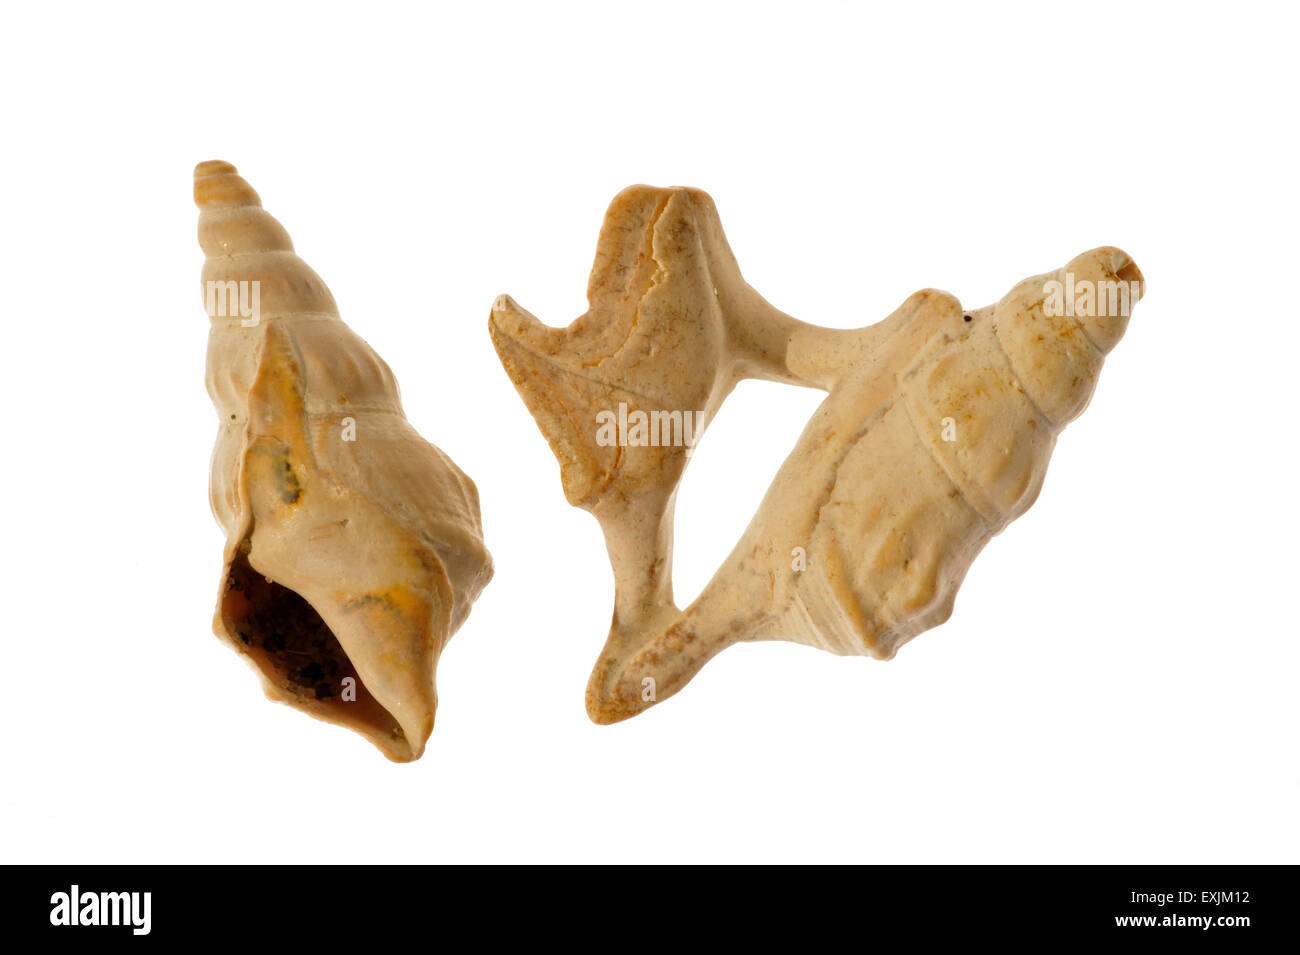 Pelikan Fuß (Aporrhais Pespelecani / Aporrhais Pespelicanis) Schalen auf weißem Hintergrund Stockfoto